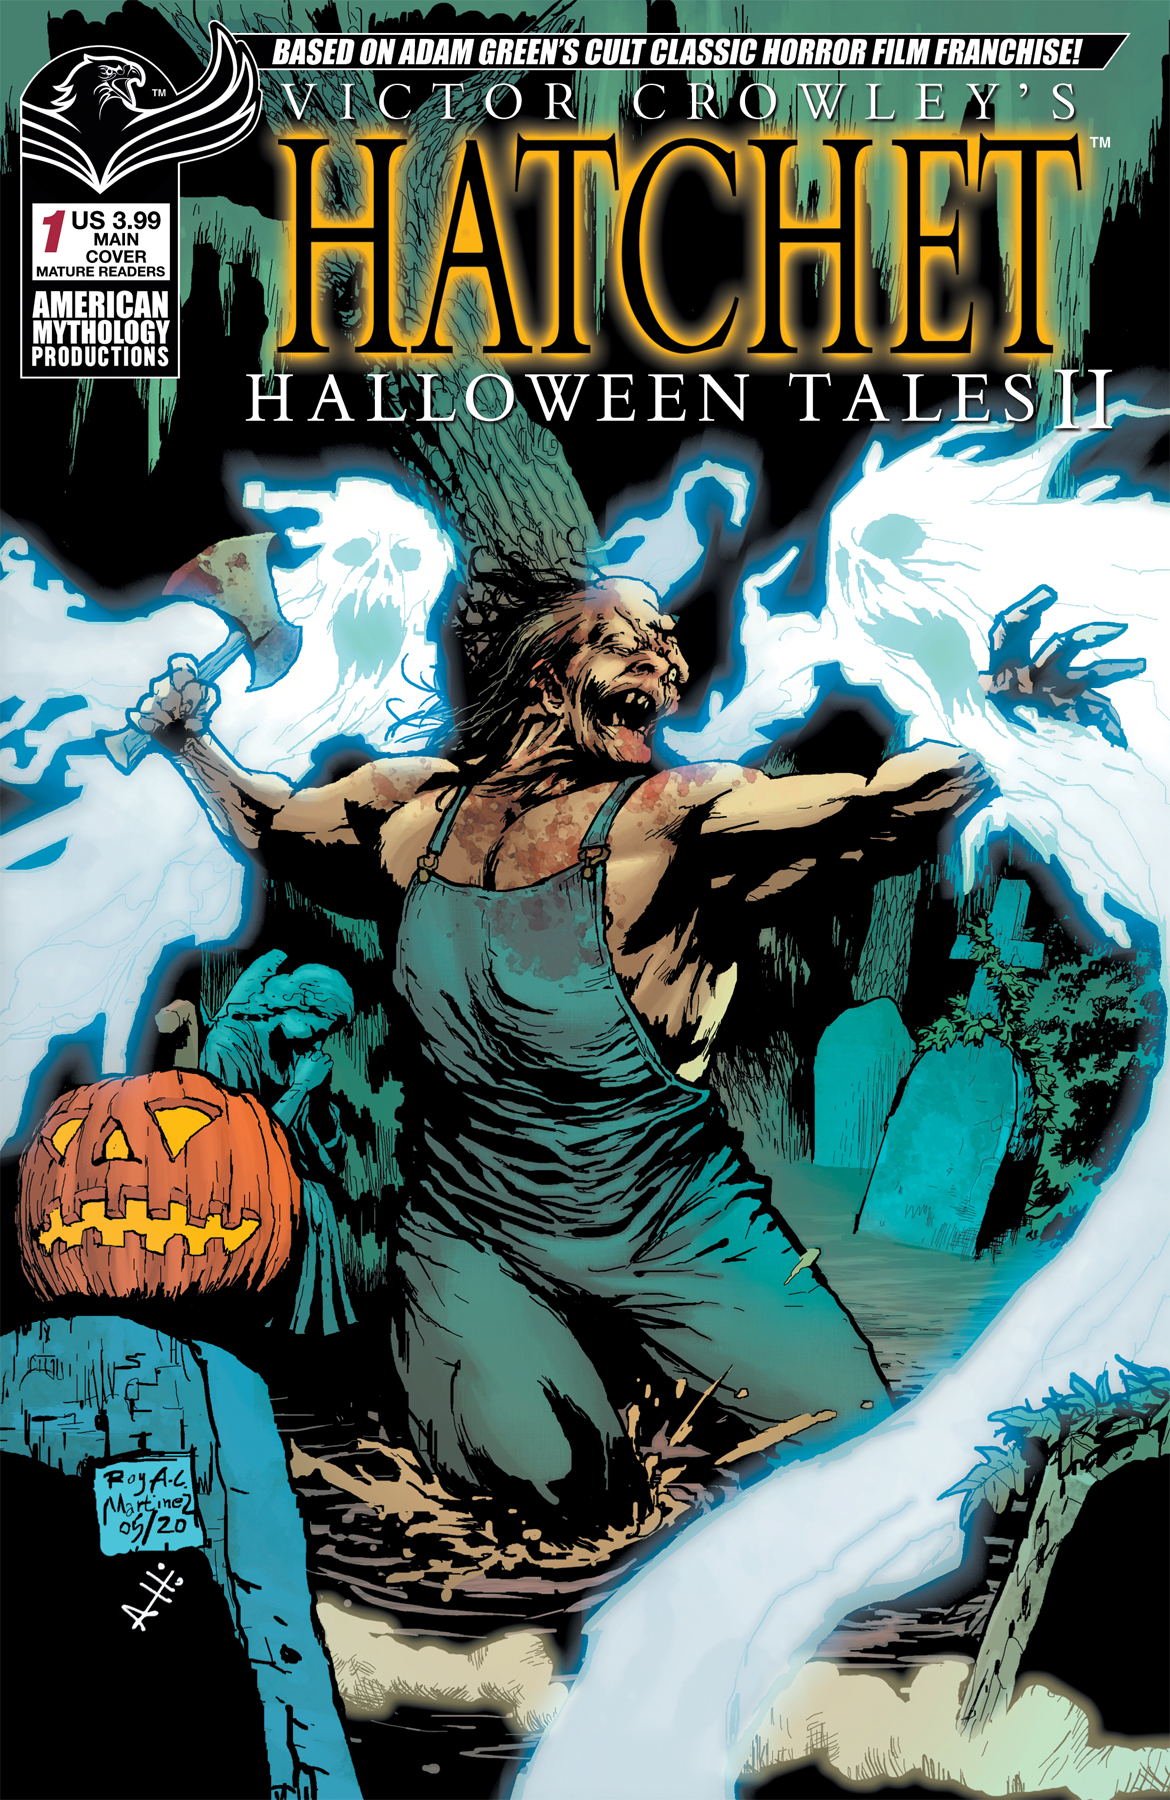 Victor Crowley Hatchet Halloween Tales II #1 Cover A Martinez (Mature)